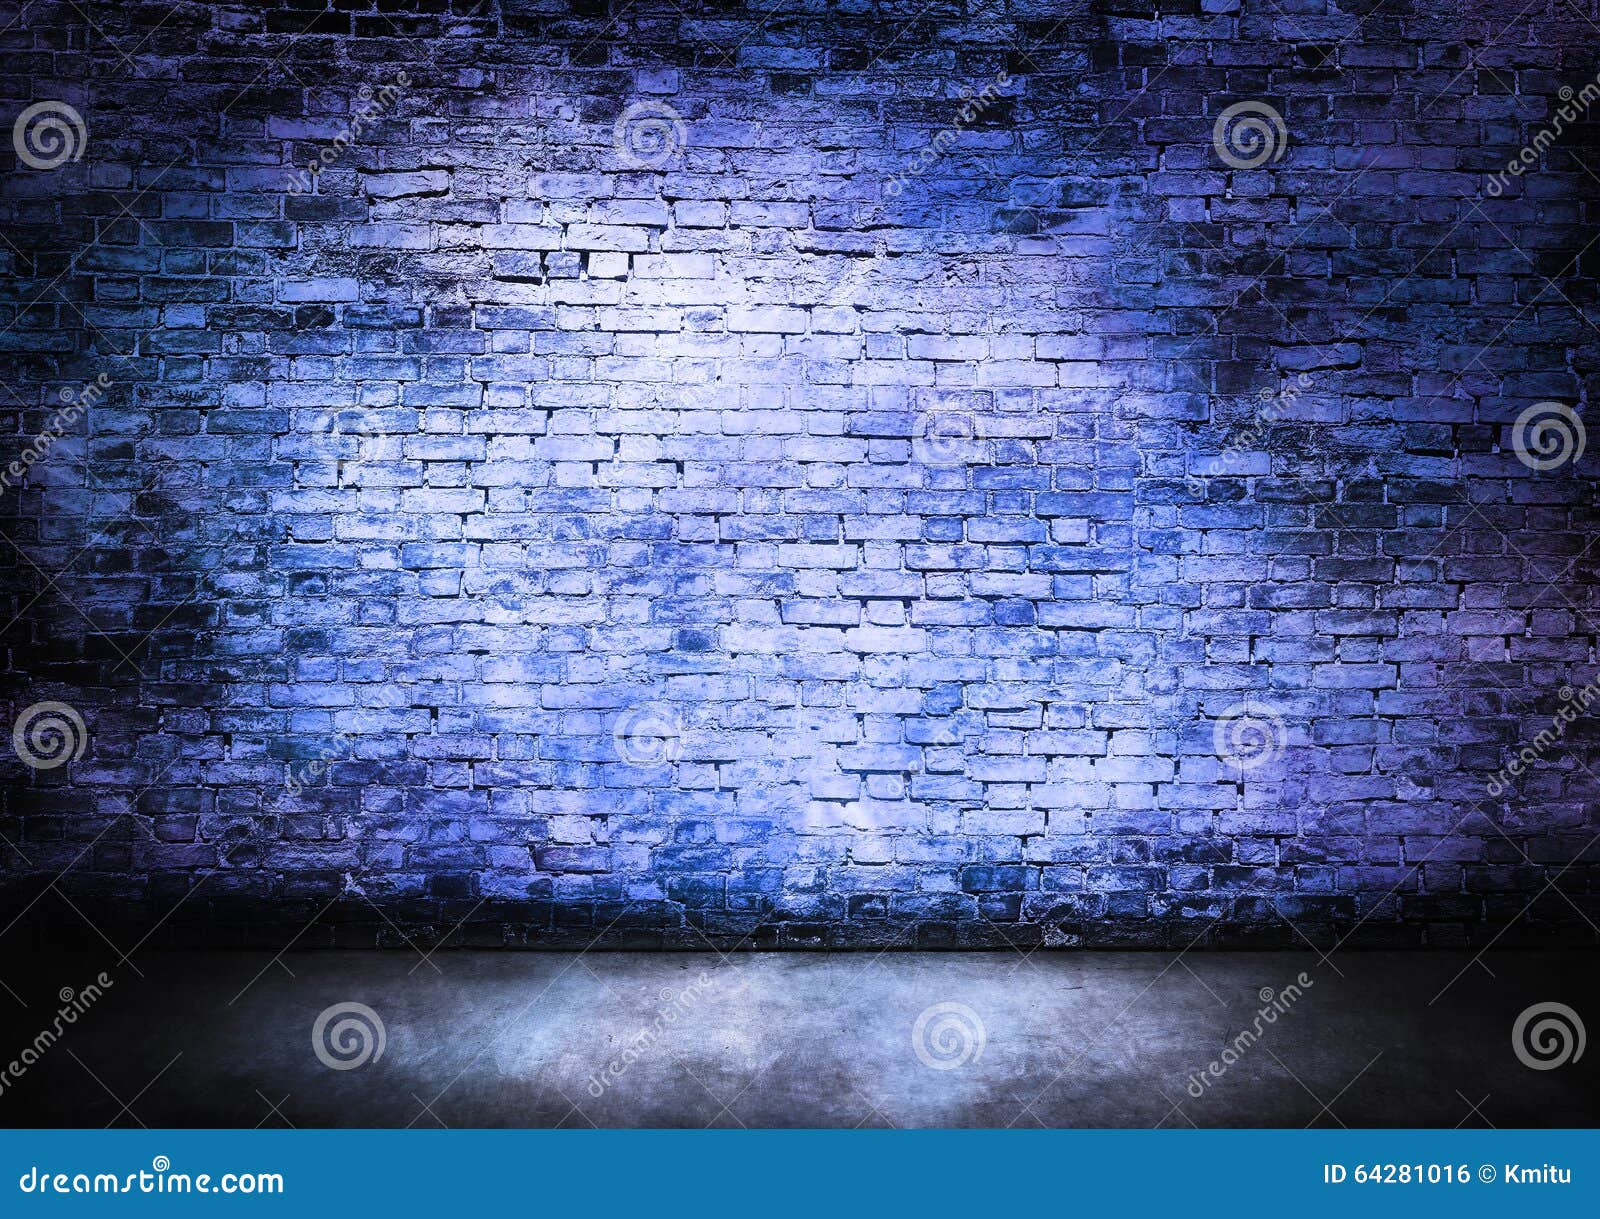 murky brick wall in blue